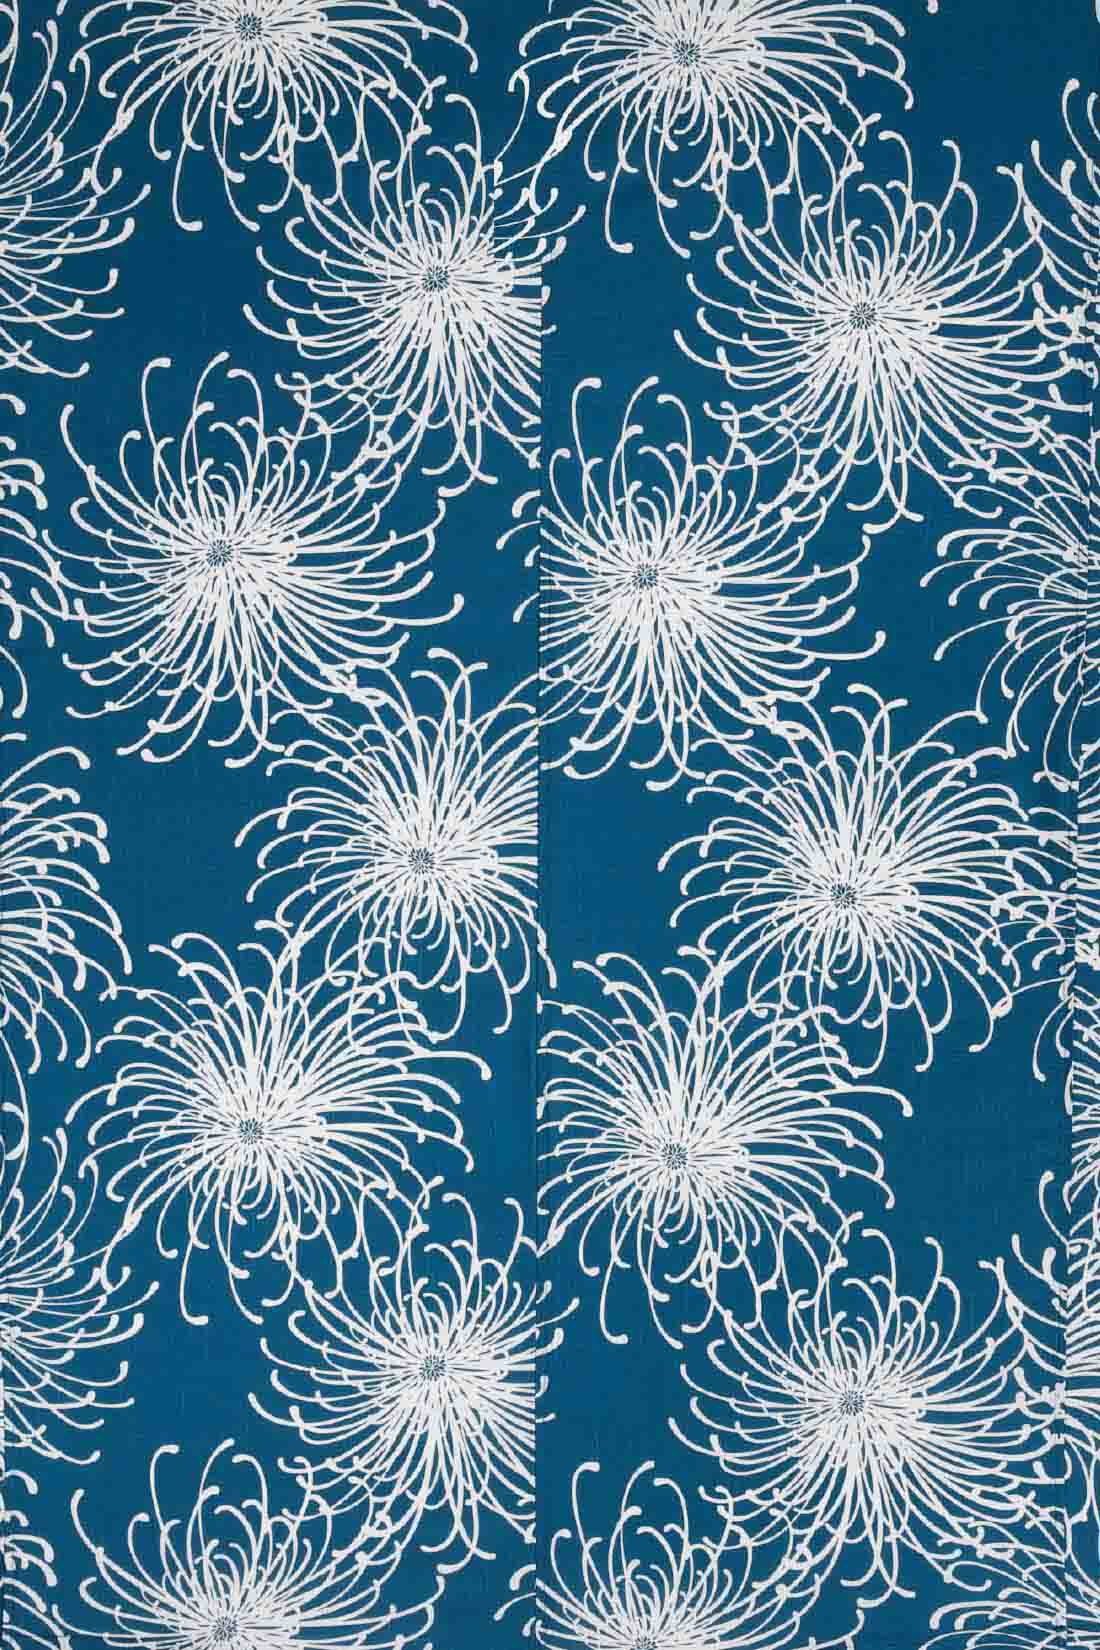 IEDIT|IEDIT[イディット]　着付けいらずでさっと着られる 大人の粋な二部式セパレート浴衣とへこ帯セット〈藍色×水色〉|日本の伝統色である藍色に、大輪の白い糸菊が繊細かつ華やかな印象。